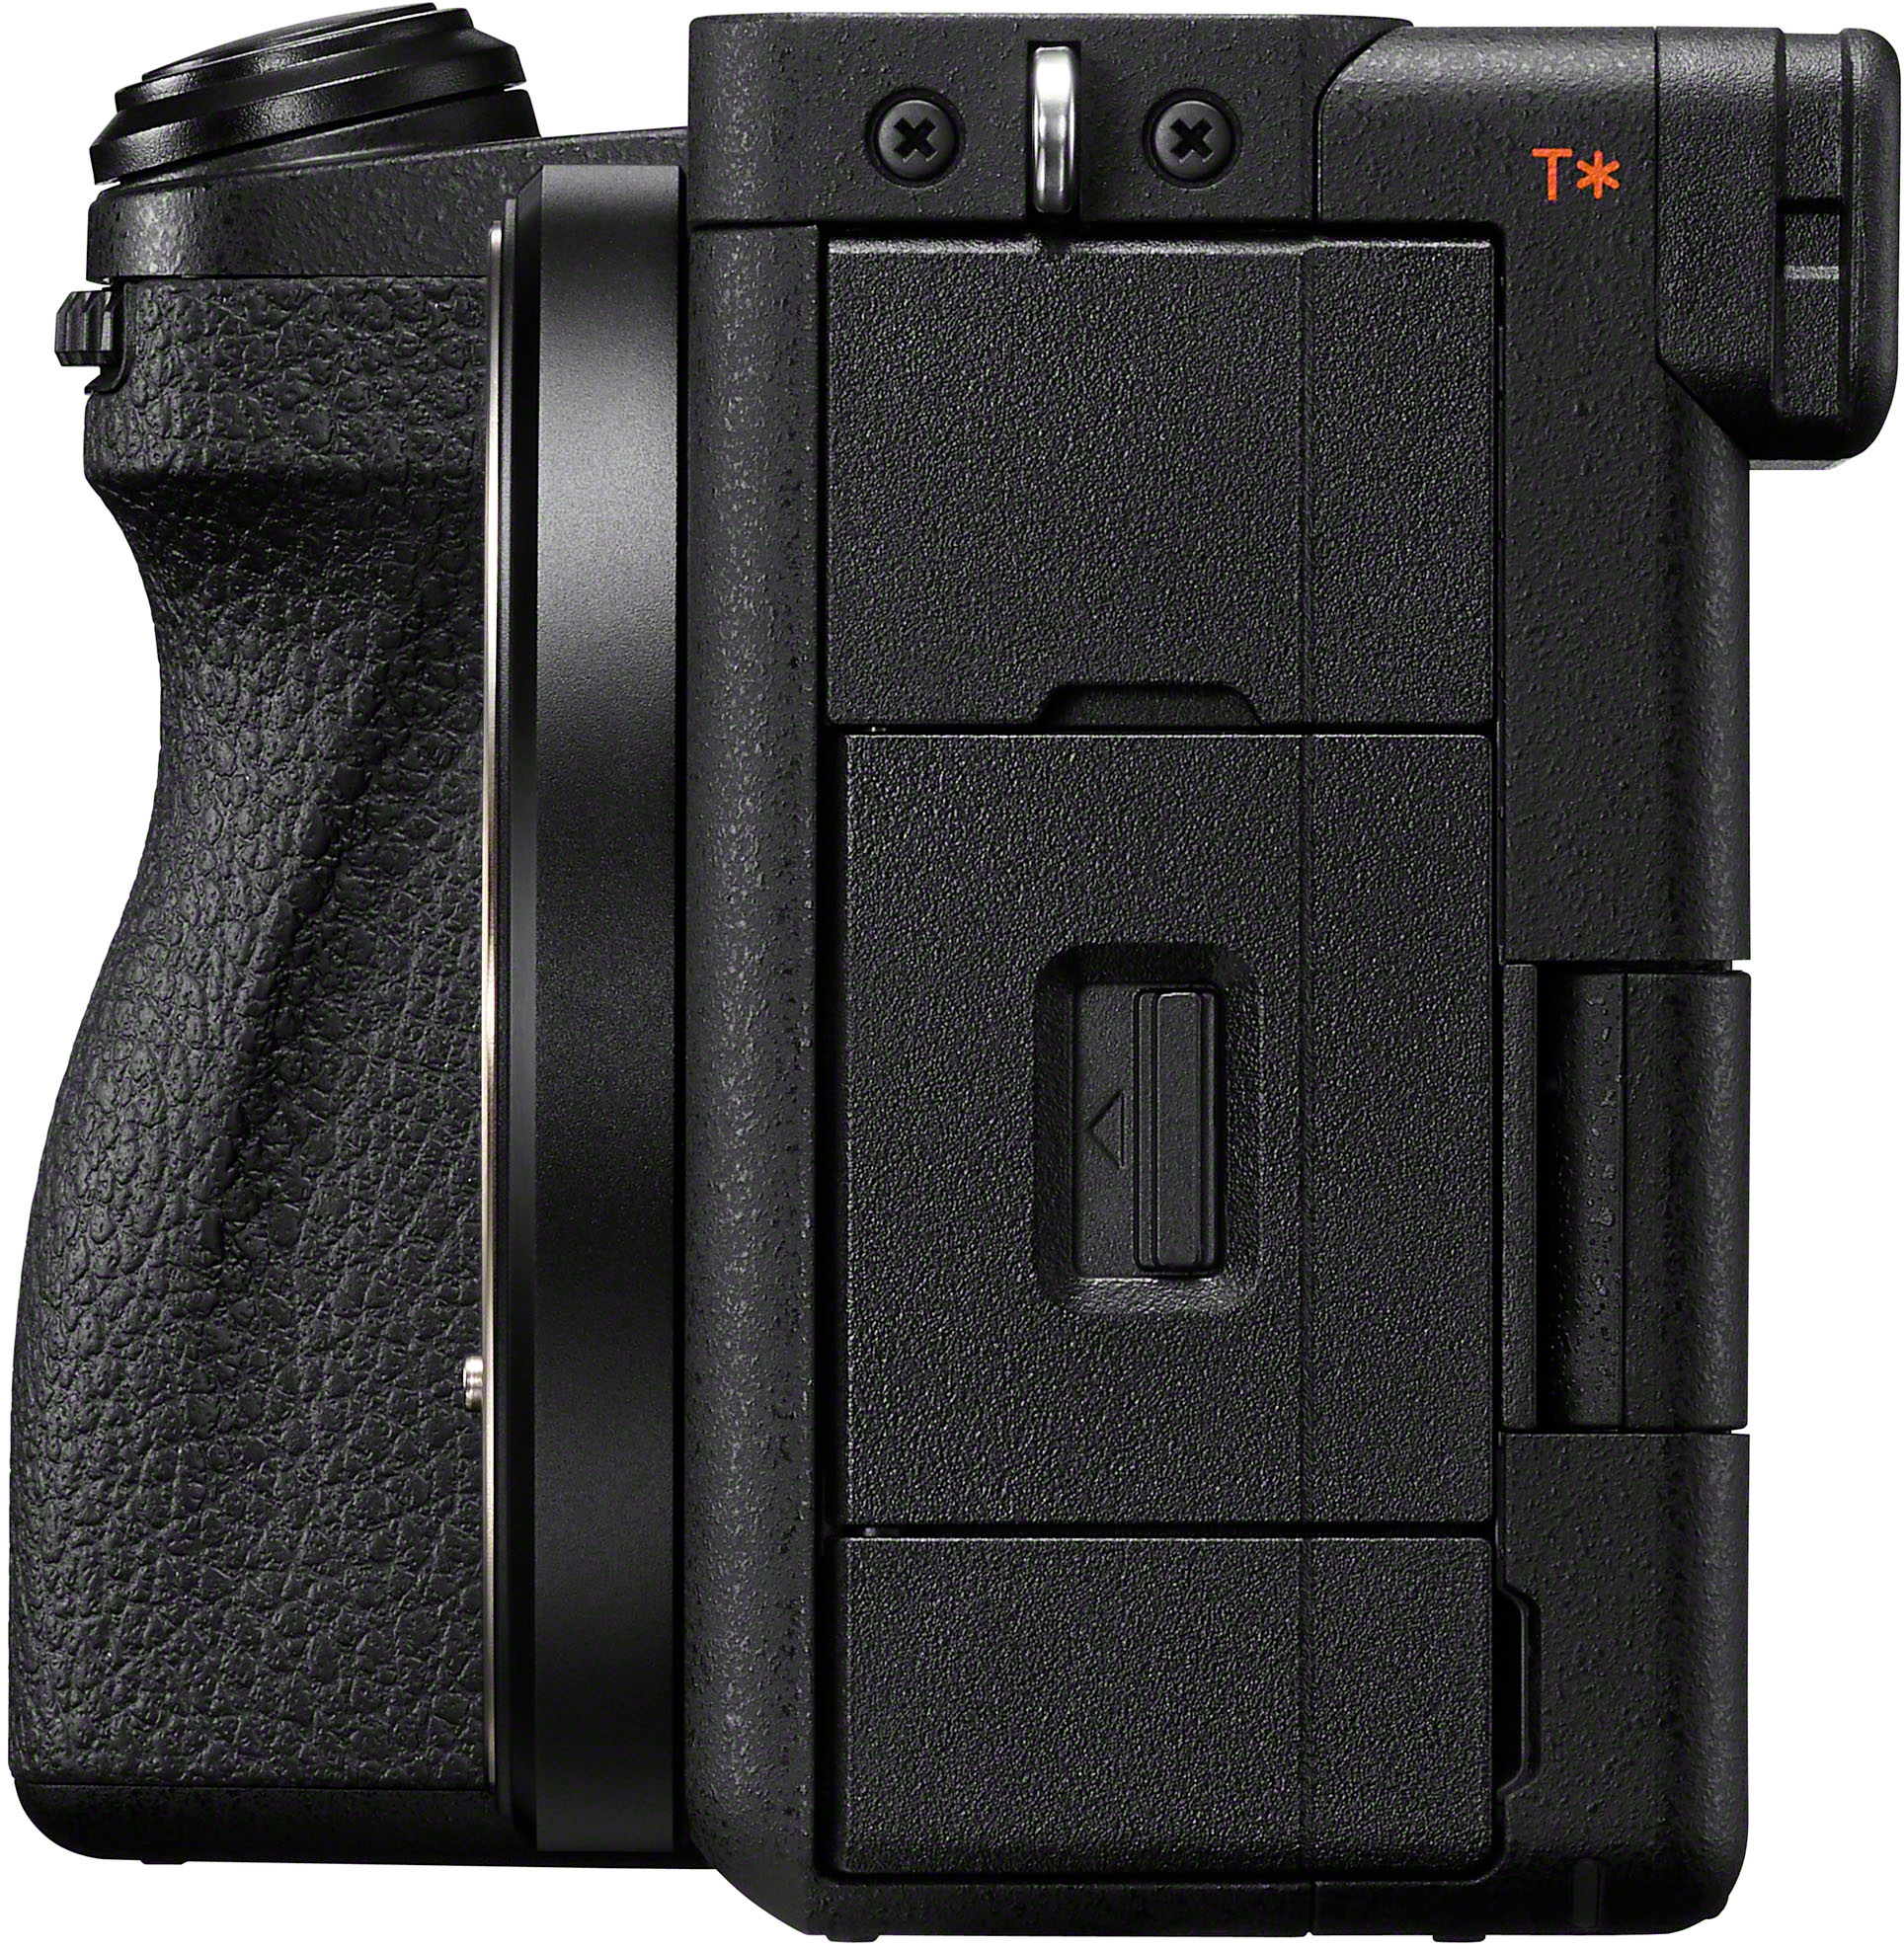 Sony Alpha 6700 APS-C Mirrorless Camera (Body Only) Black ILCE6700